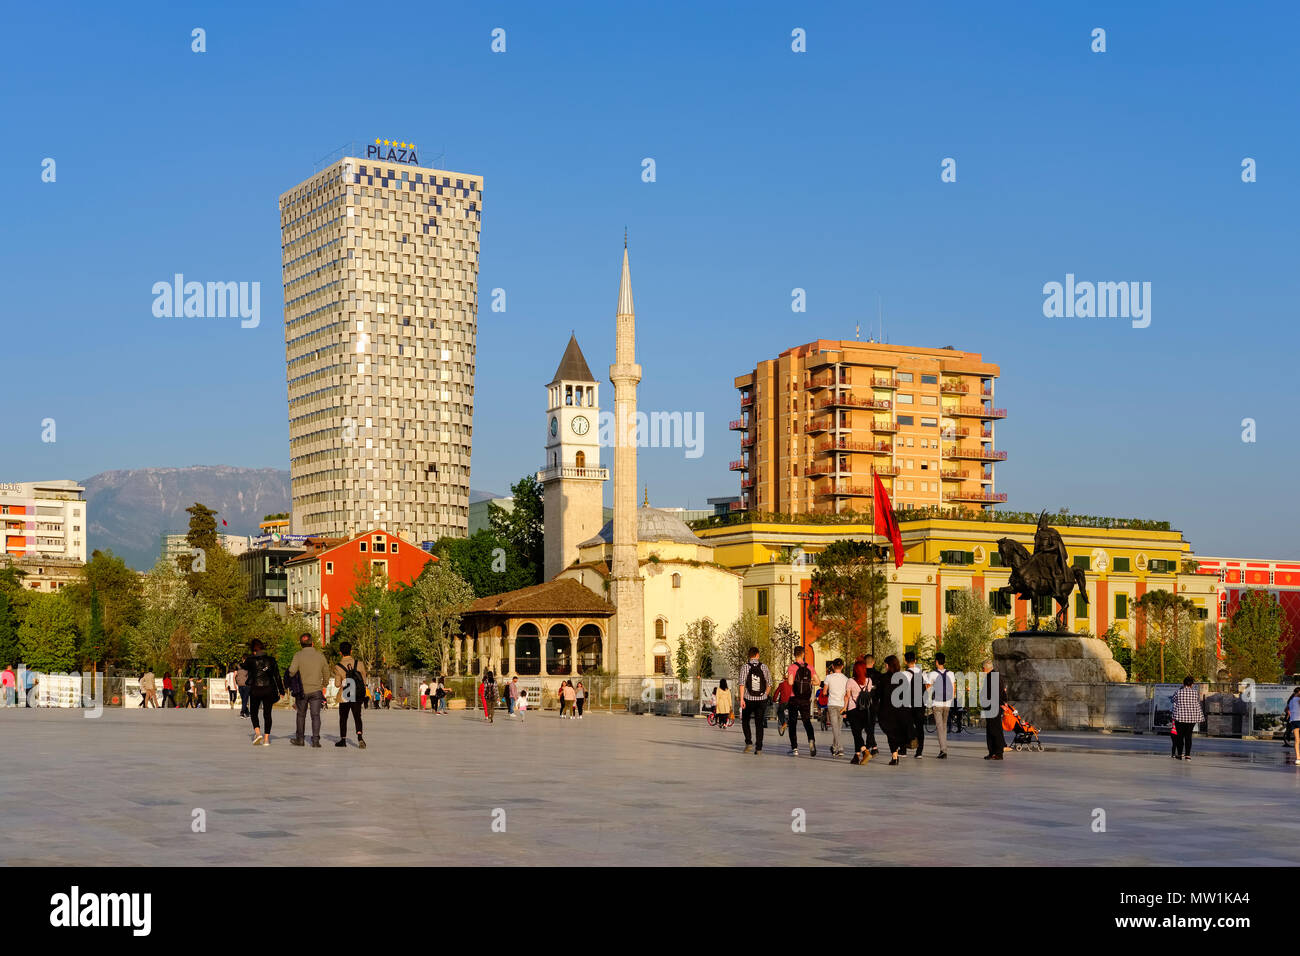 Skanderbeg Square with TID Tower Hotel Plaza, Ethem Bey Mosque and Clock Tower, Tirana, Albania Stock Photo